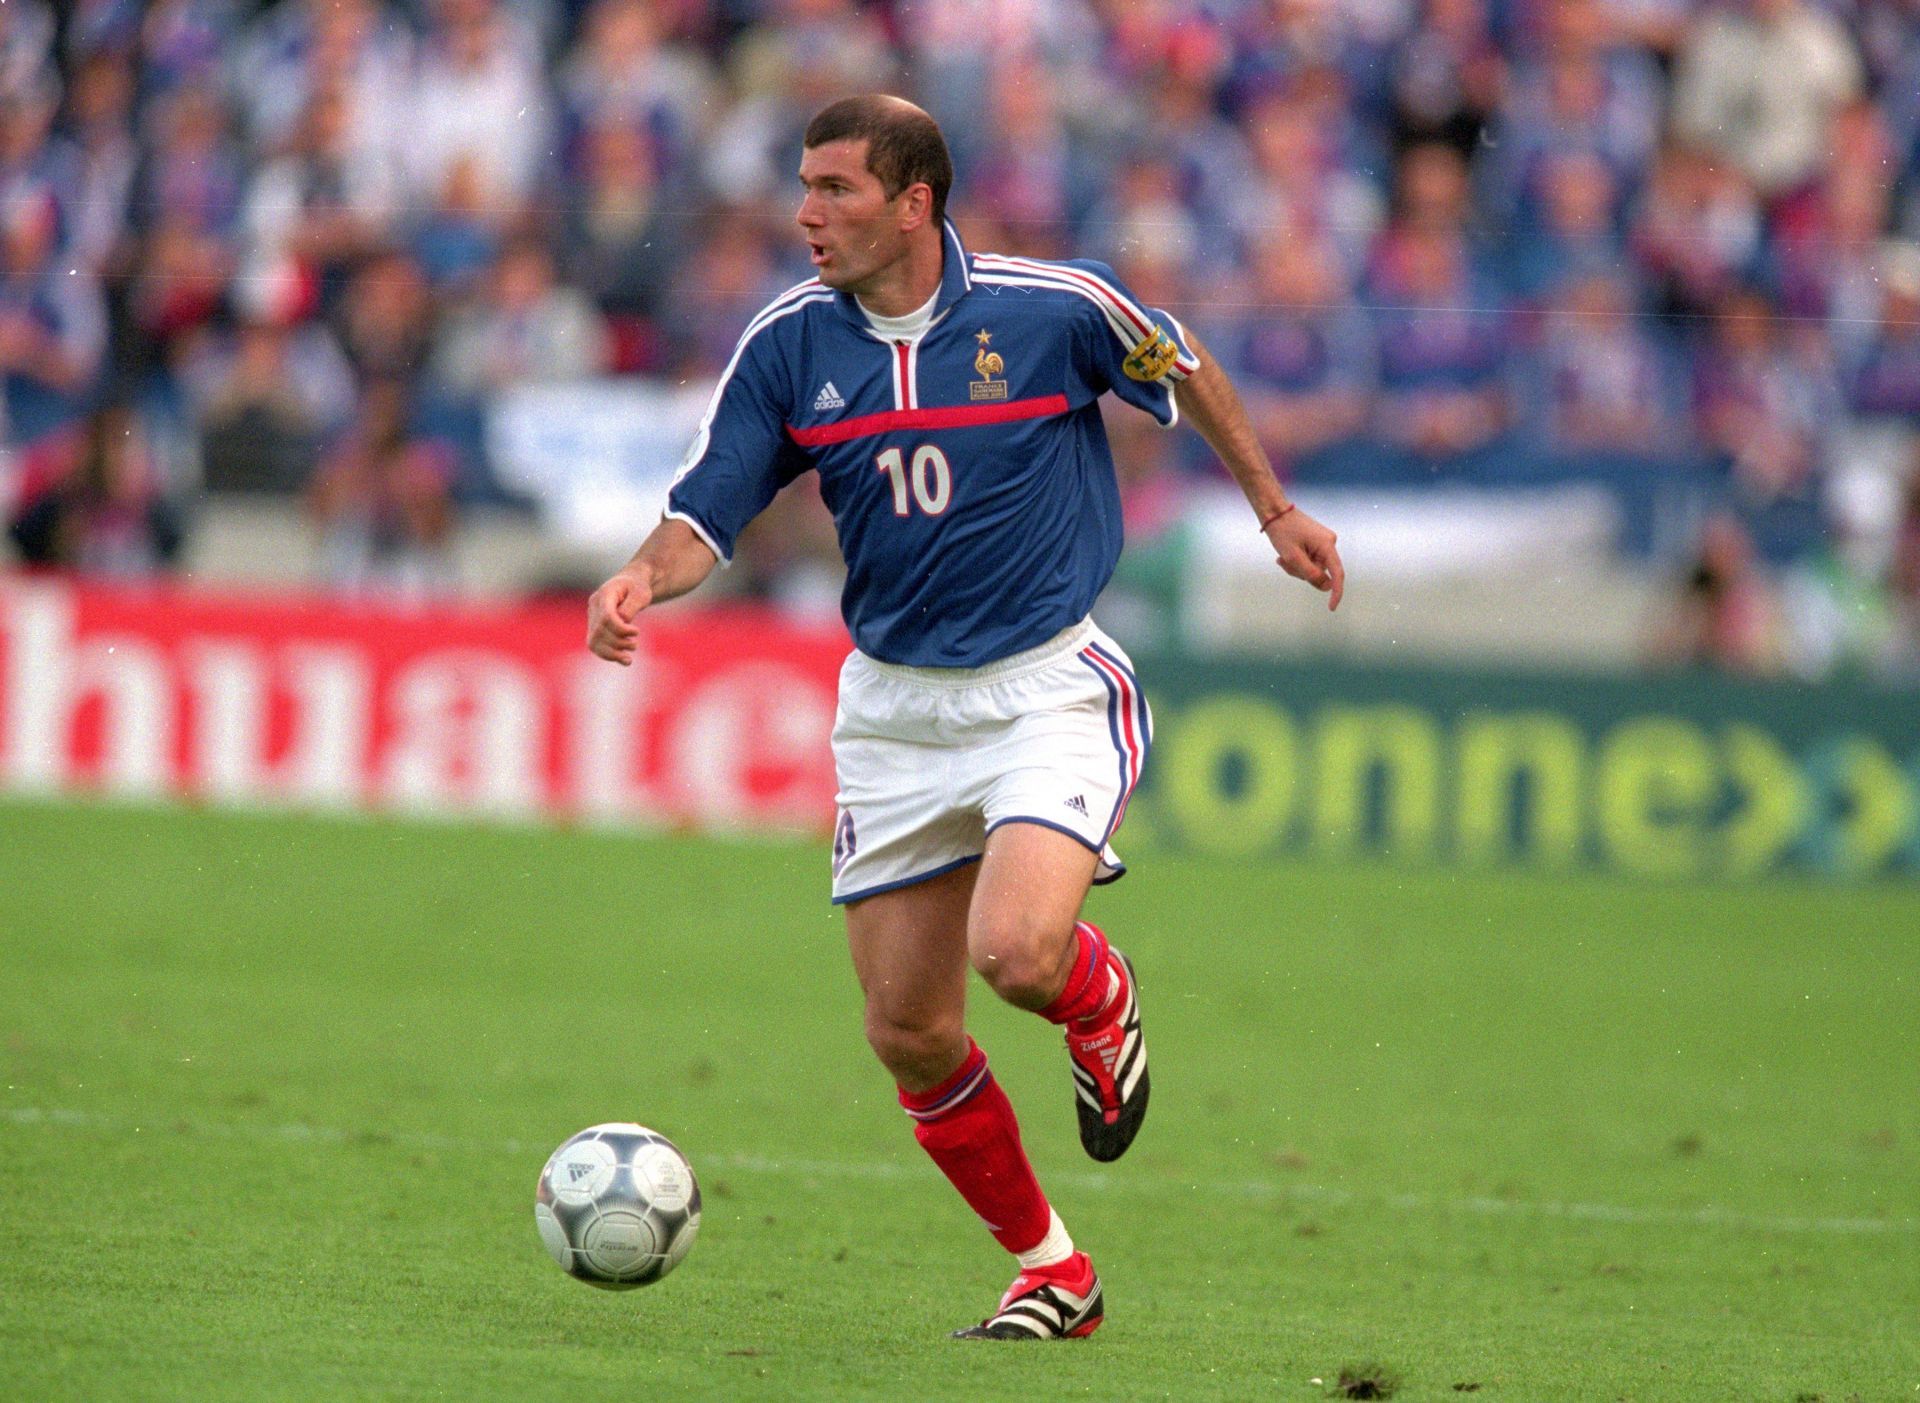 Zinedine Zidane in action at the 2000 European Championship